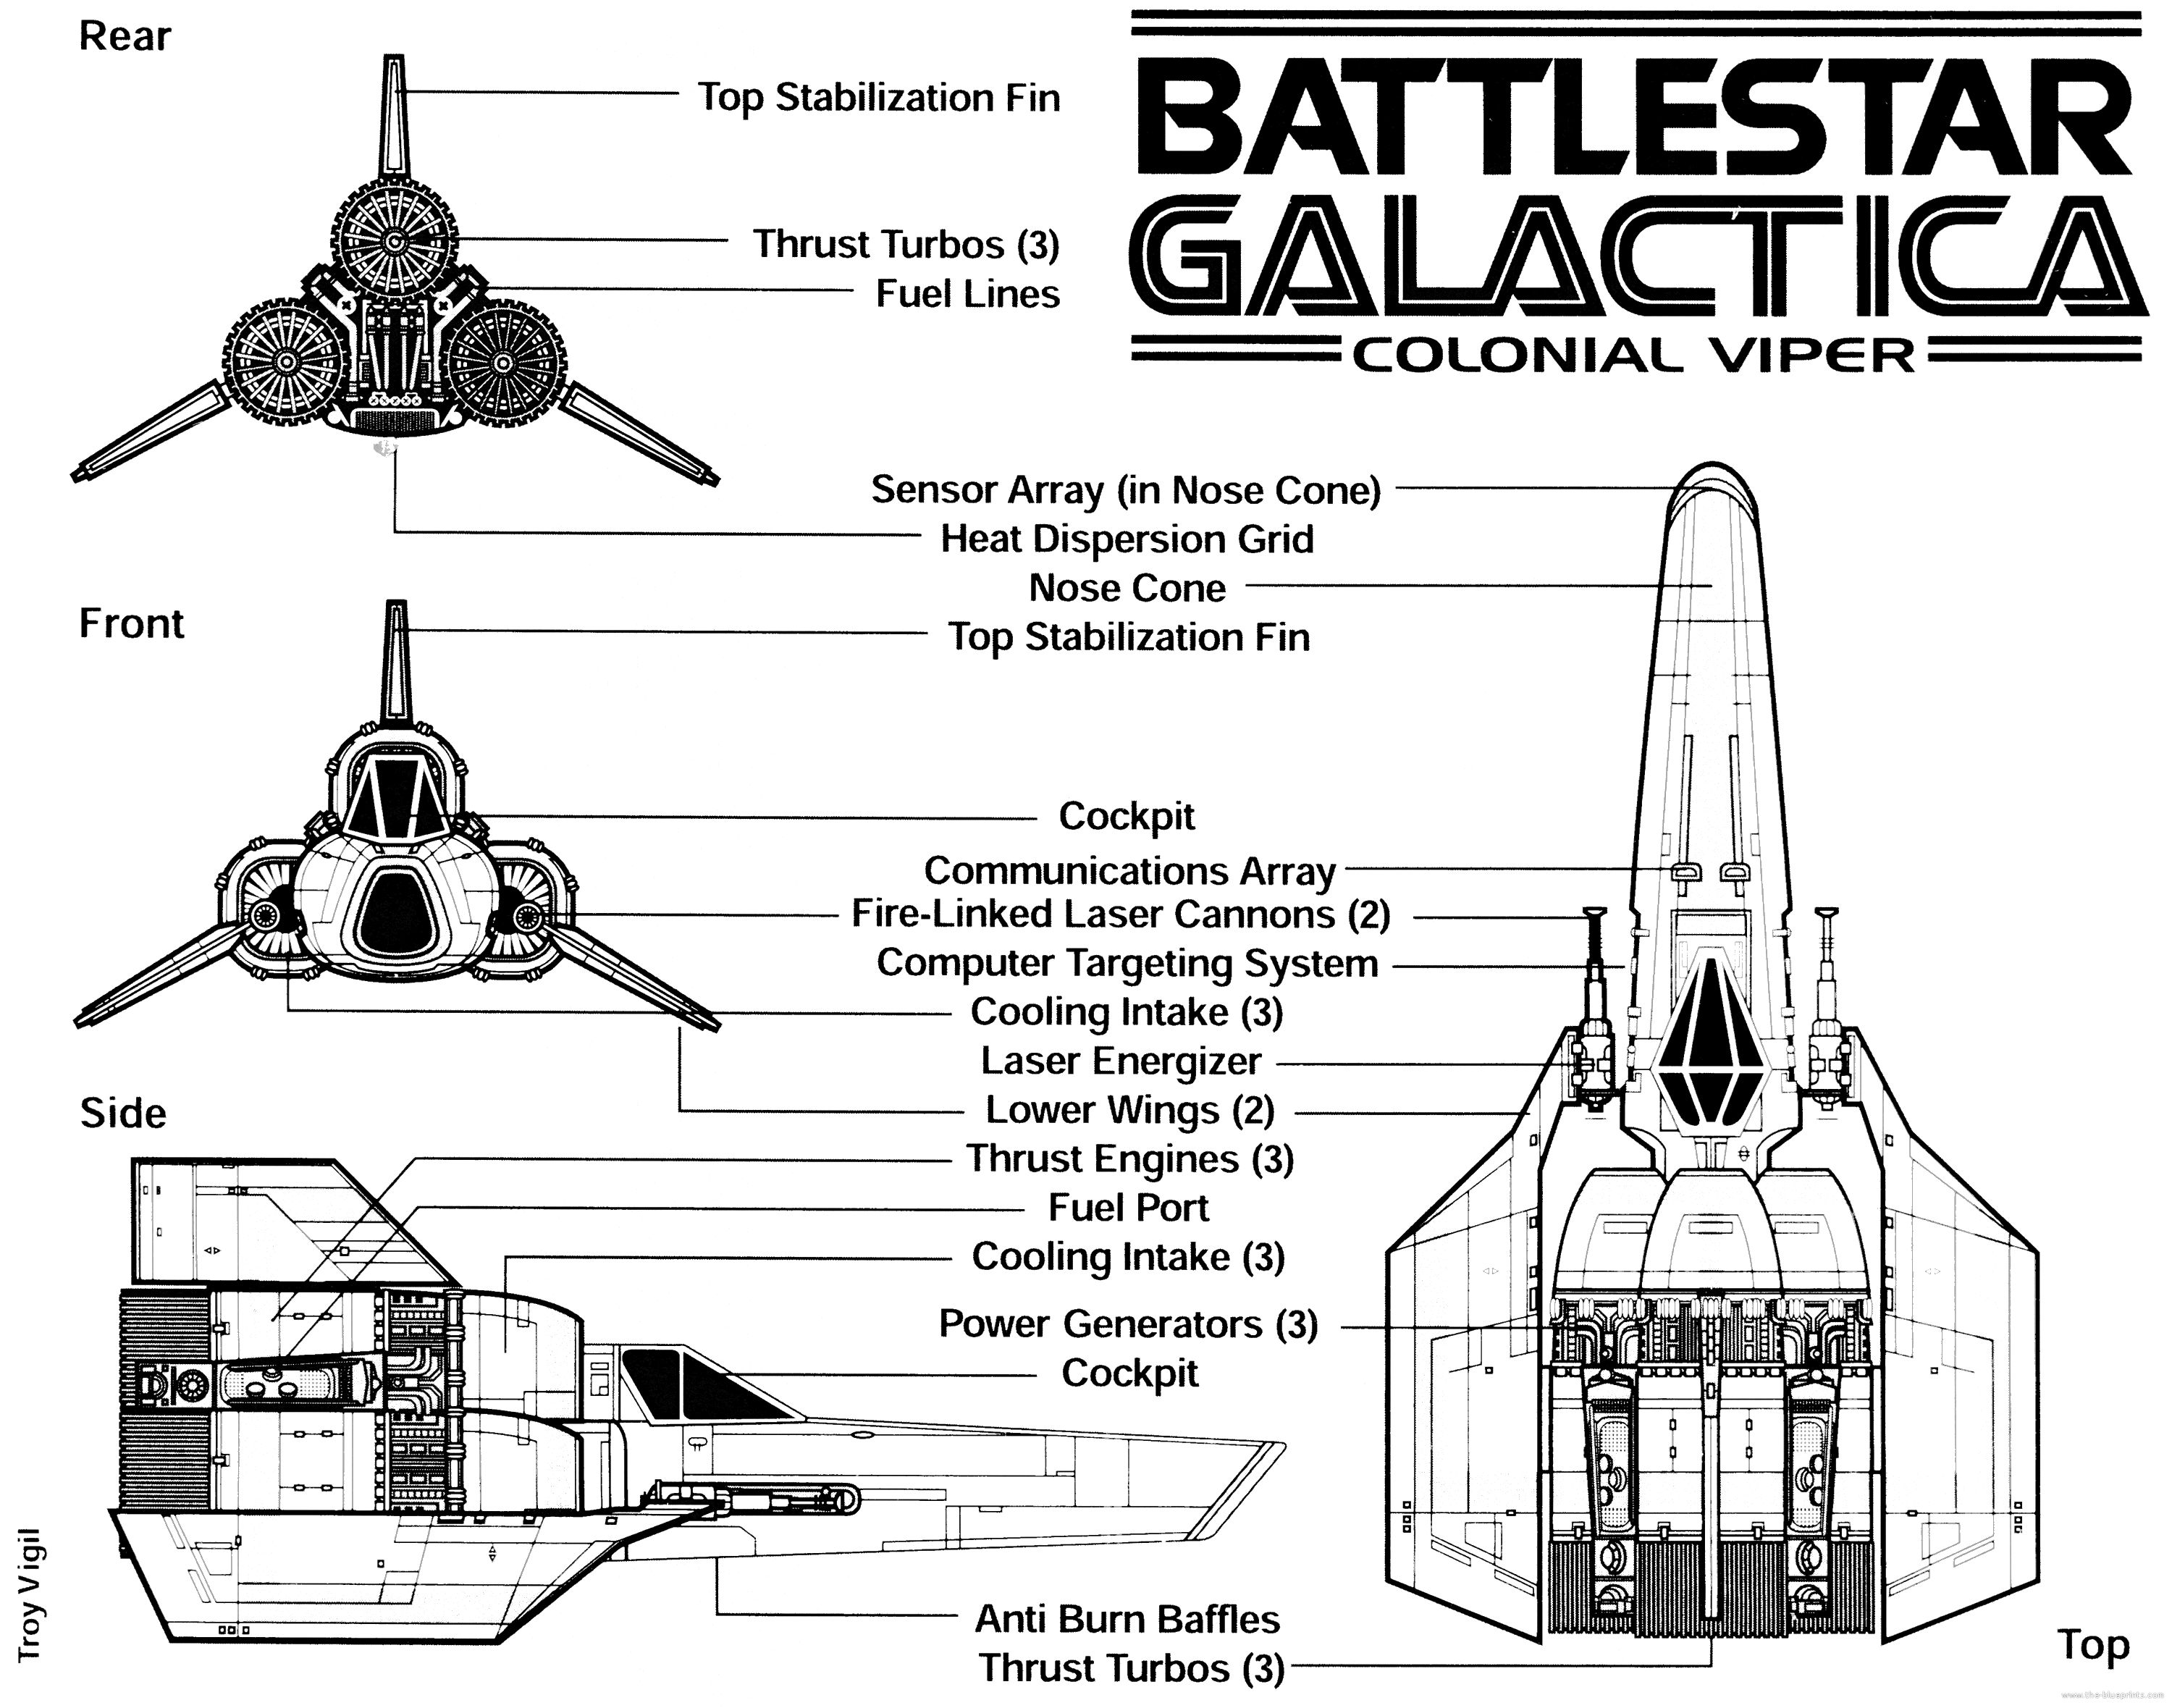 346802 descargar imagen series de televisión, battlestar galáctica (1978), battlestar galactica: fondos de pantalla y protectores de pantalla gratis